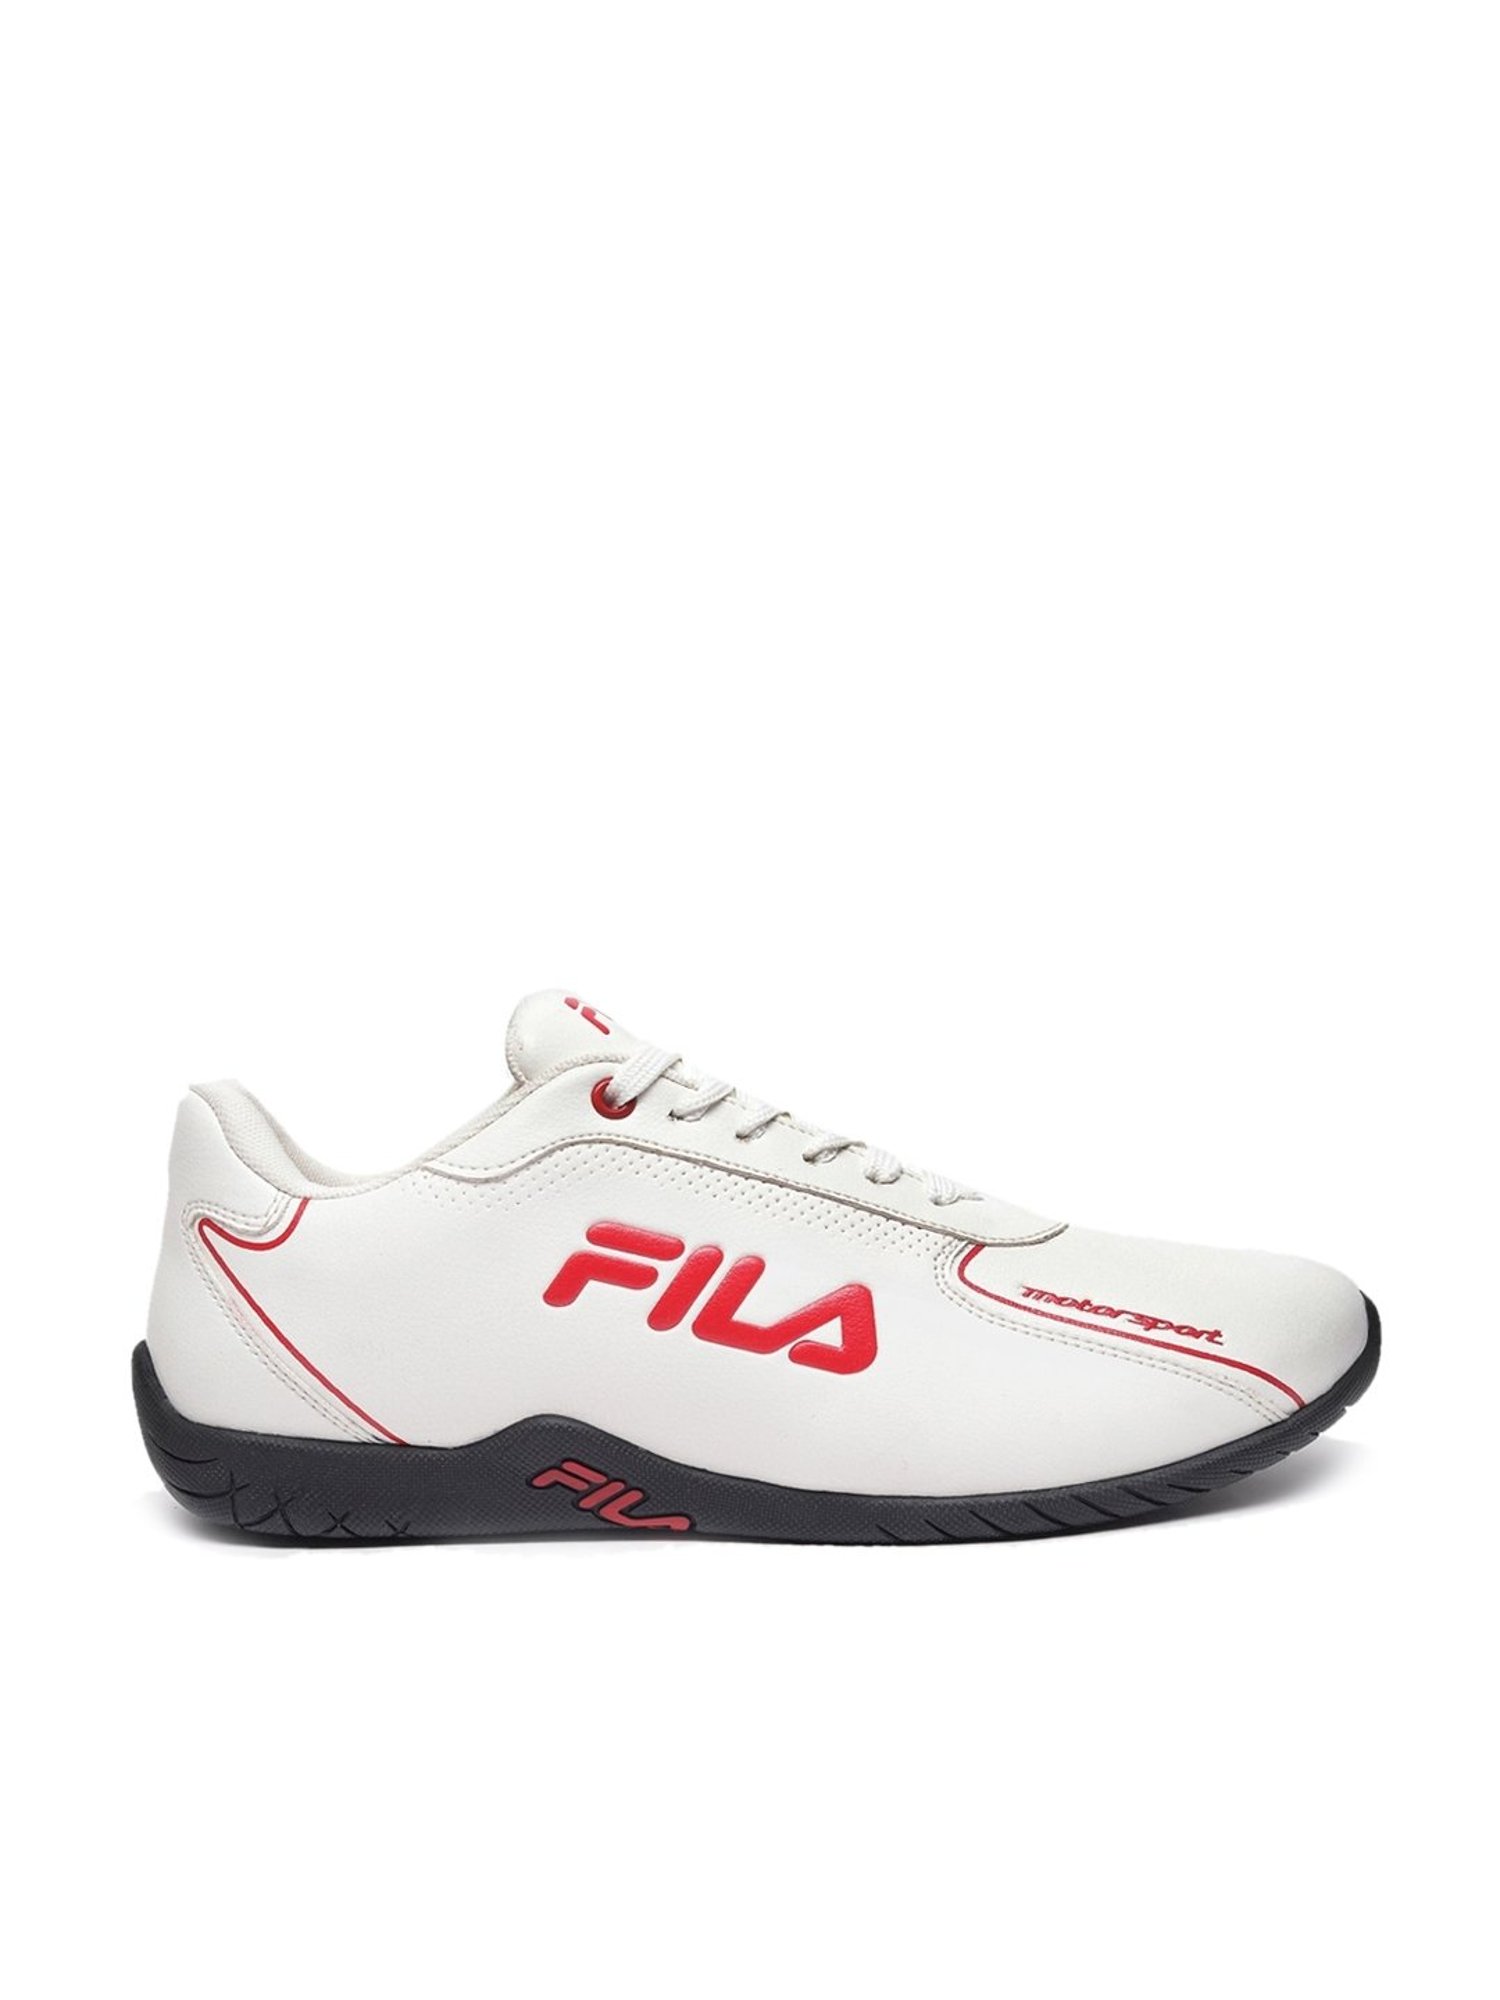 Buy Fila Men's Hardwin Navy, Lime and White Sneakers - 8 UK/India (42 EU)  at Amazon.in